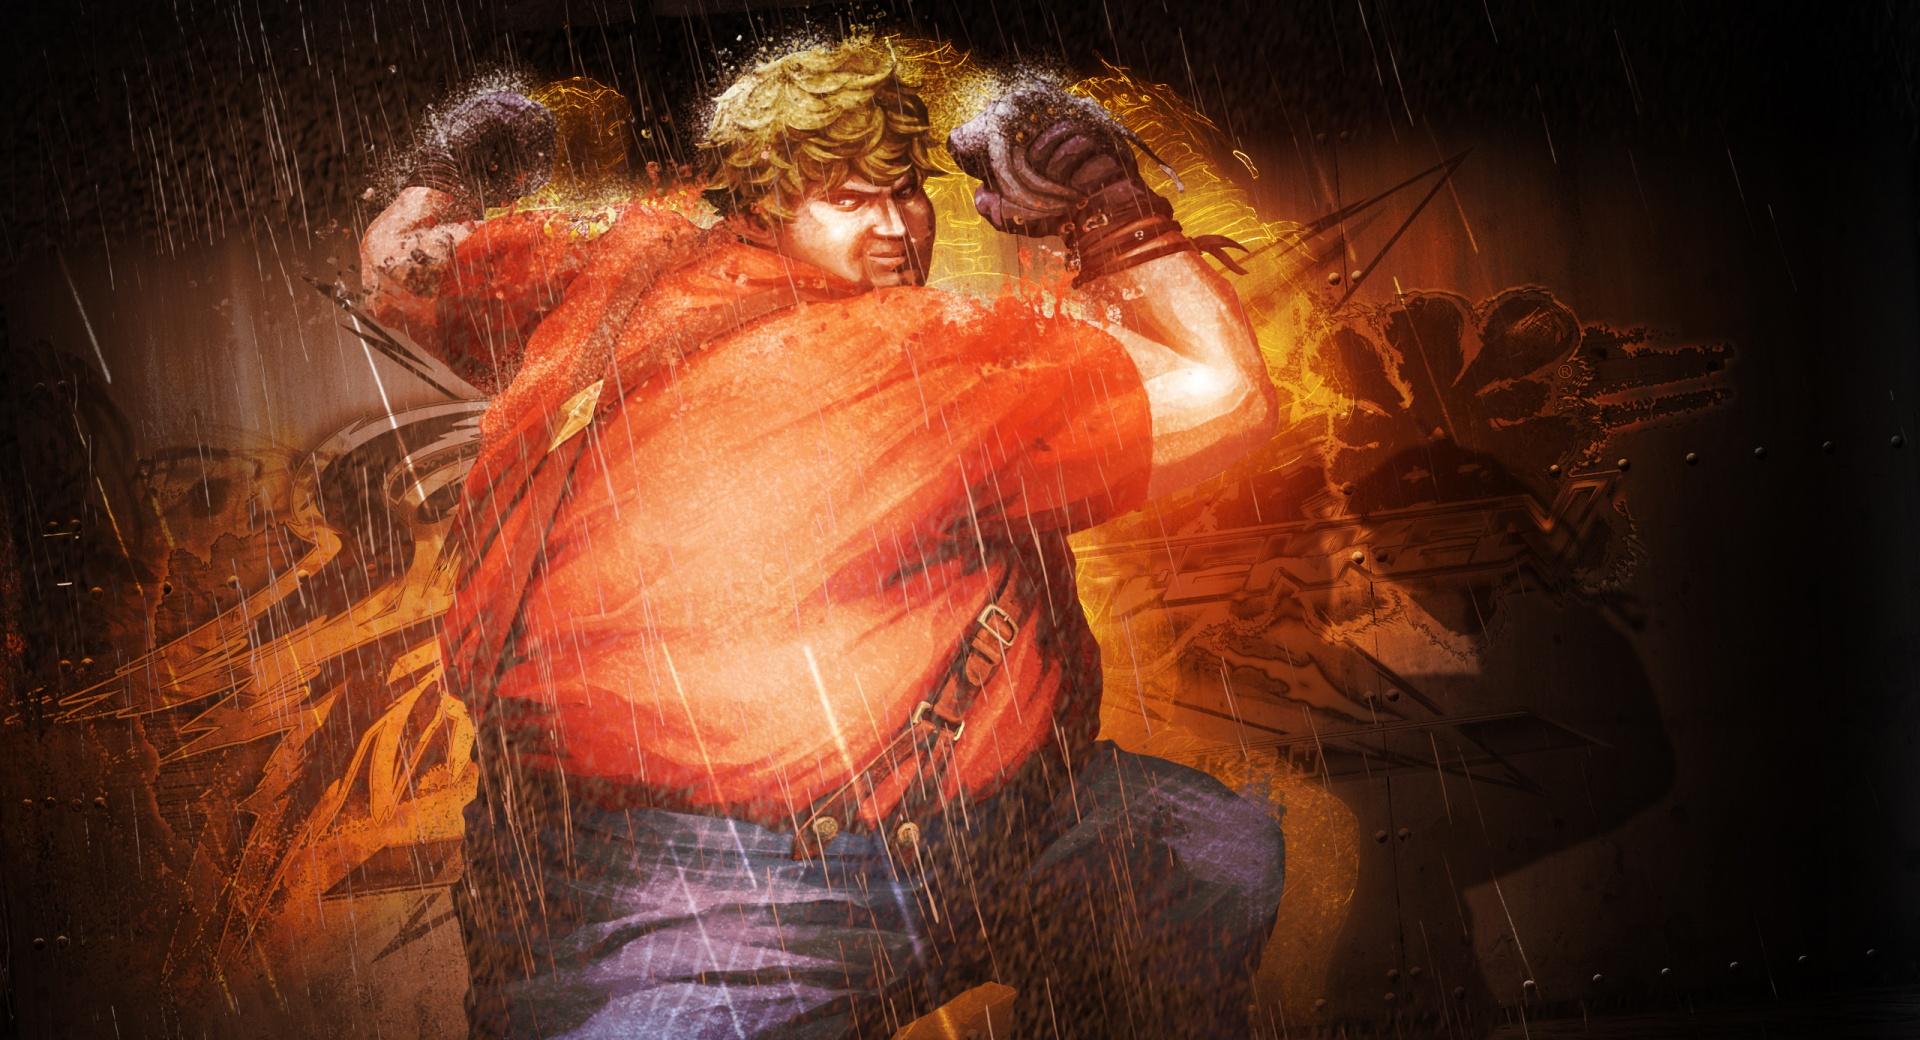 Street Fighter X Tekken (2012) Bob wallpapers HD quality